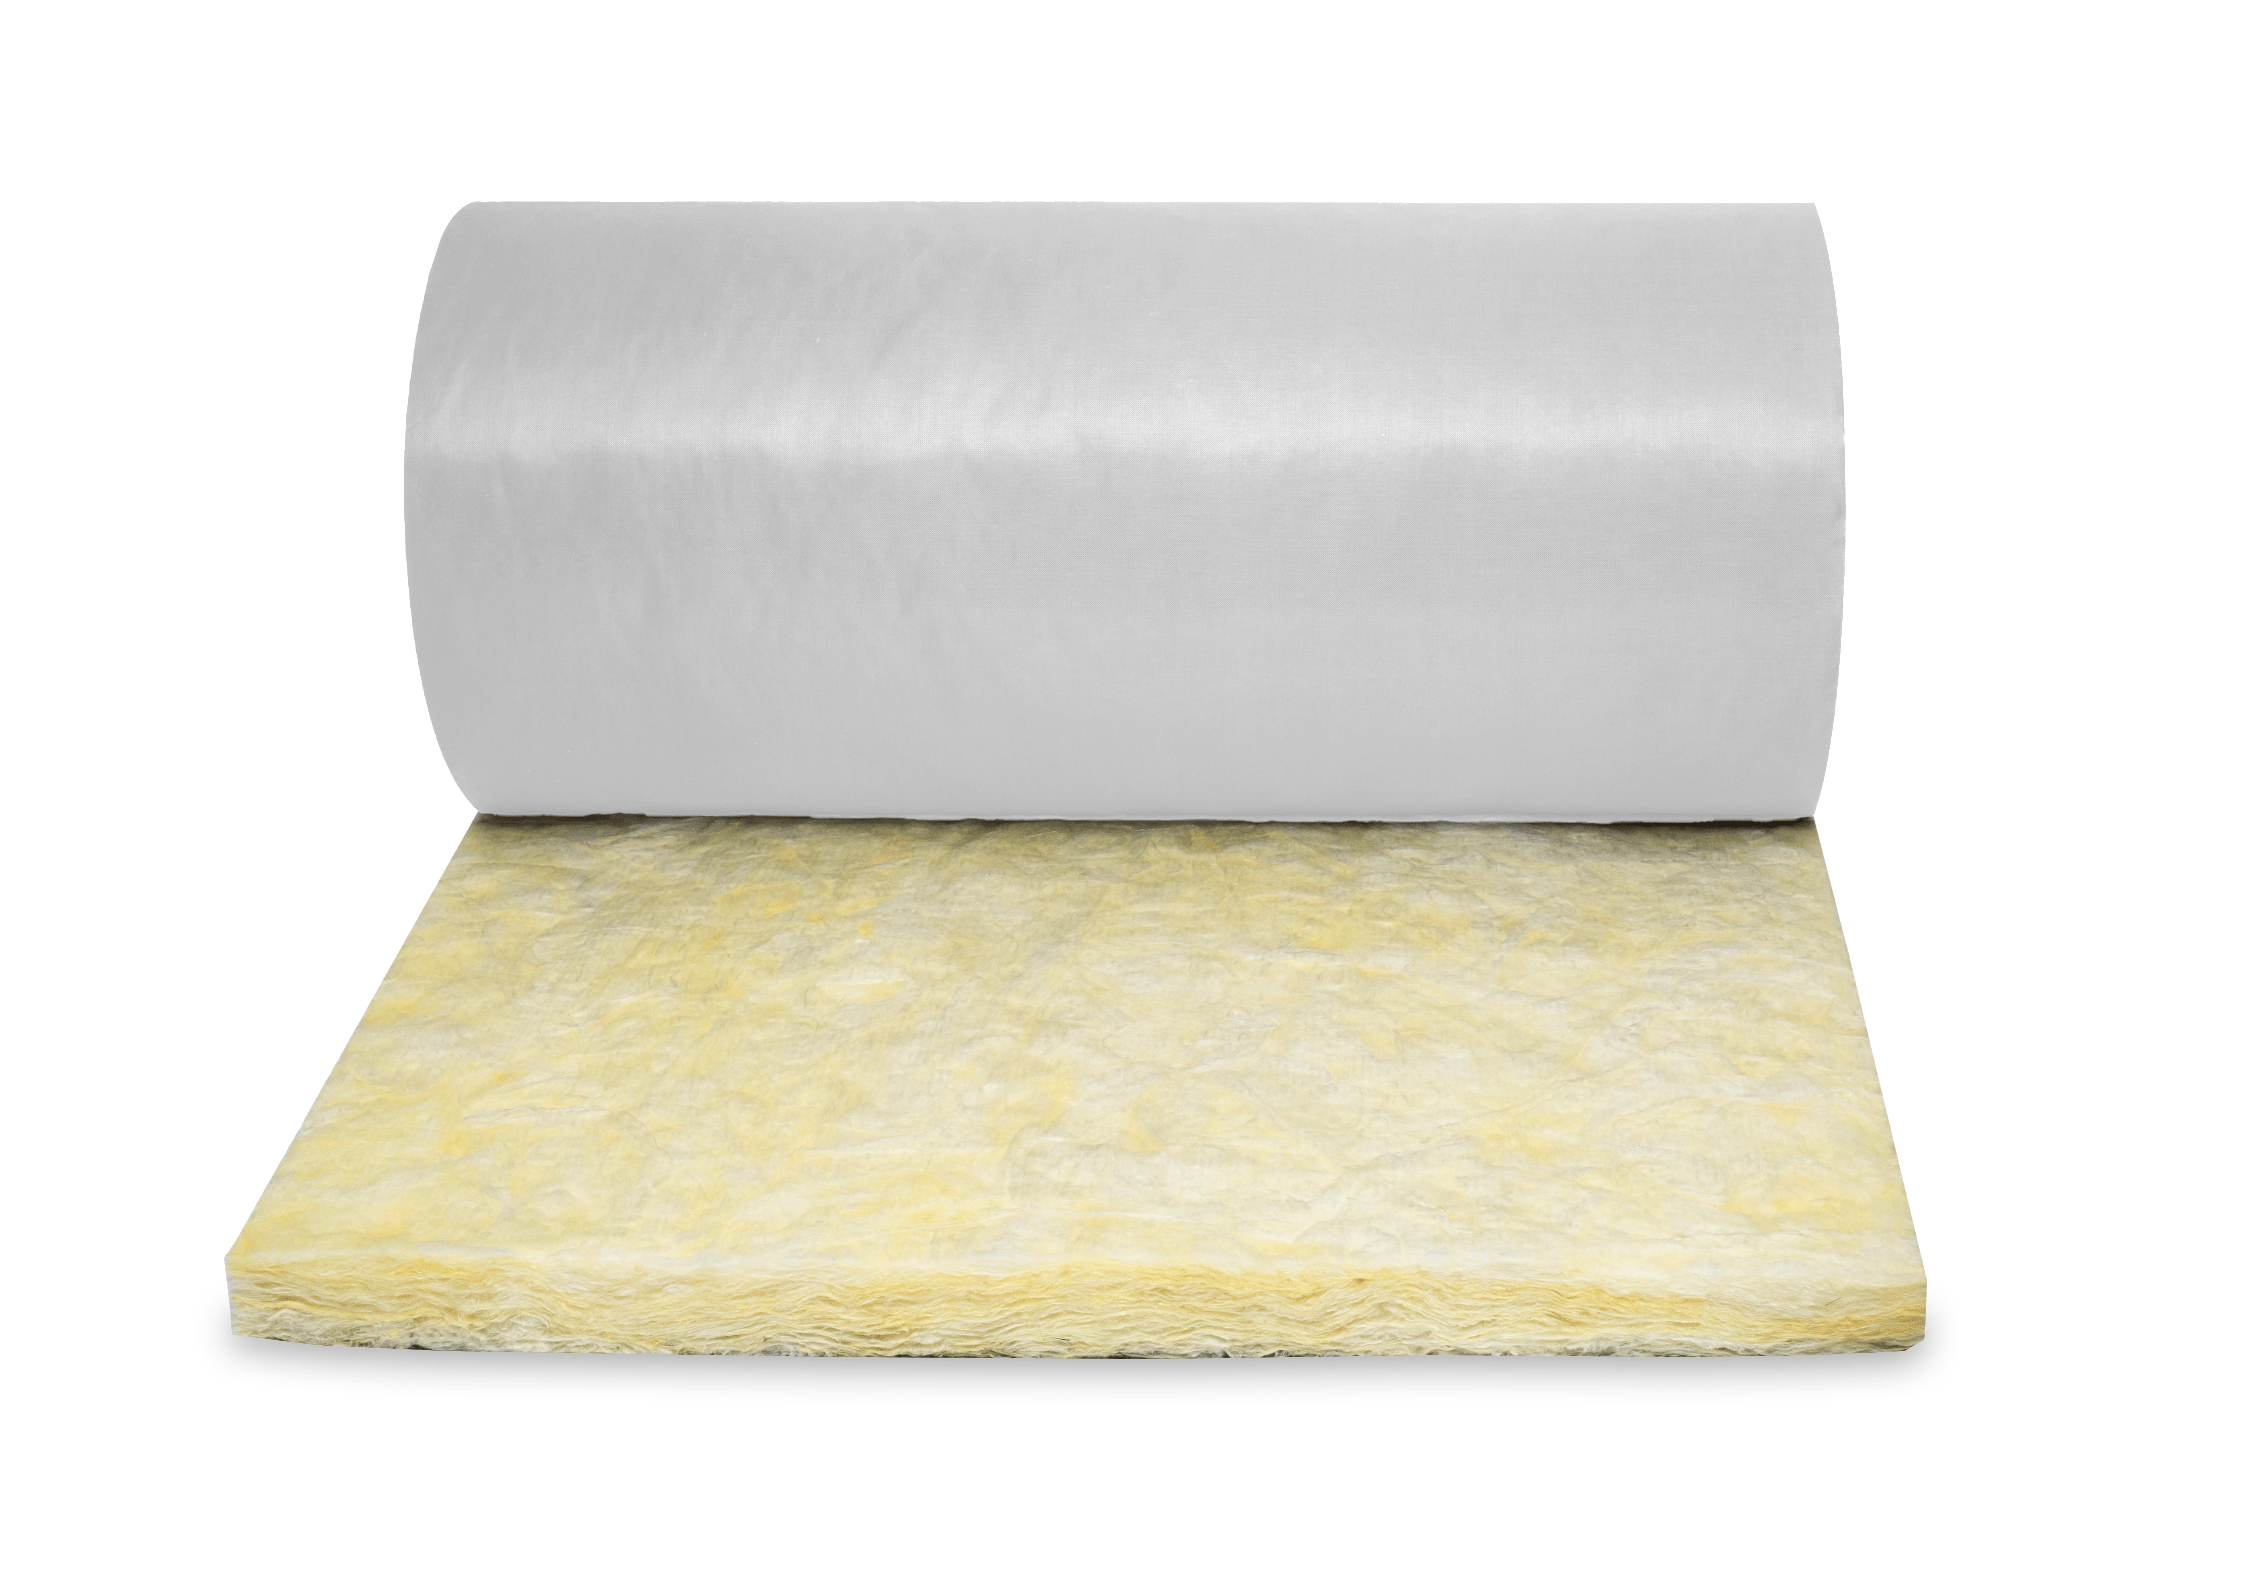 TEKHVAC WHITE TEKHVAC Coated Foil Faced Duct Wrap | 1200 x 50mm IUK01586 TEKHVAC Foil Faced Duct Wrap 1200 x 50mm | insulationuk.co.uk